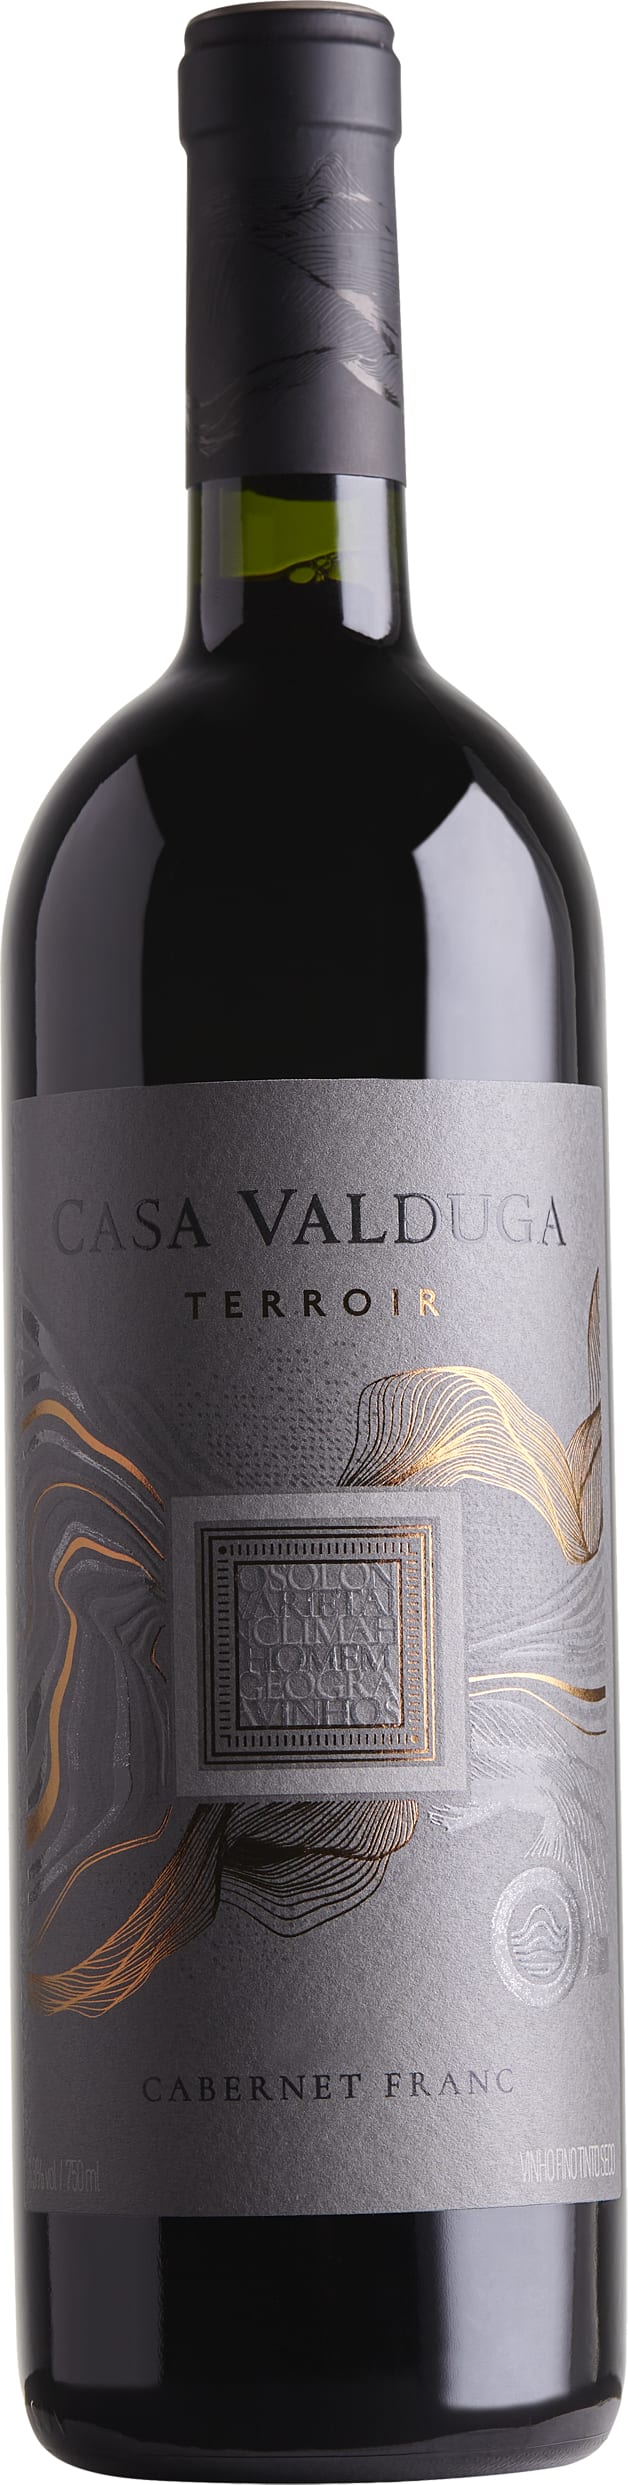 Casa Valduga Terrior Cabernet Franc 2019 75cl - Buy Casa Valduga Wines from GREAT WINES DIRECT wine shop